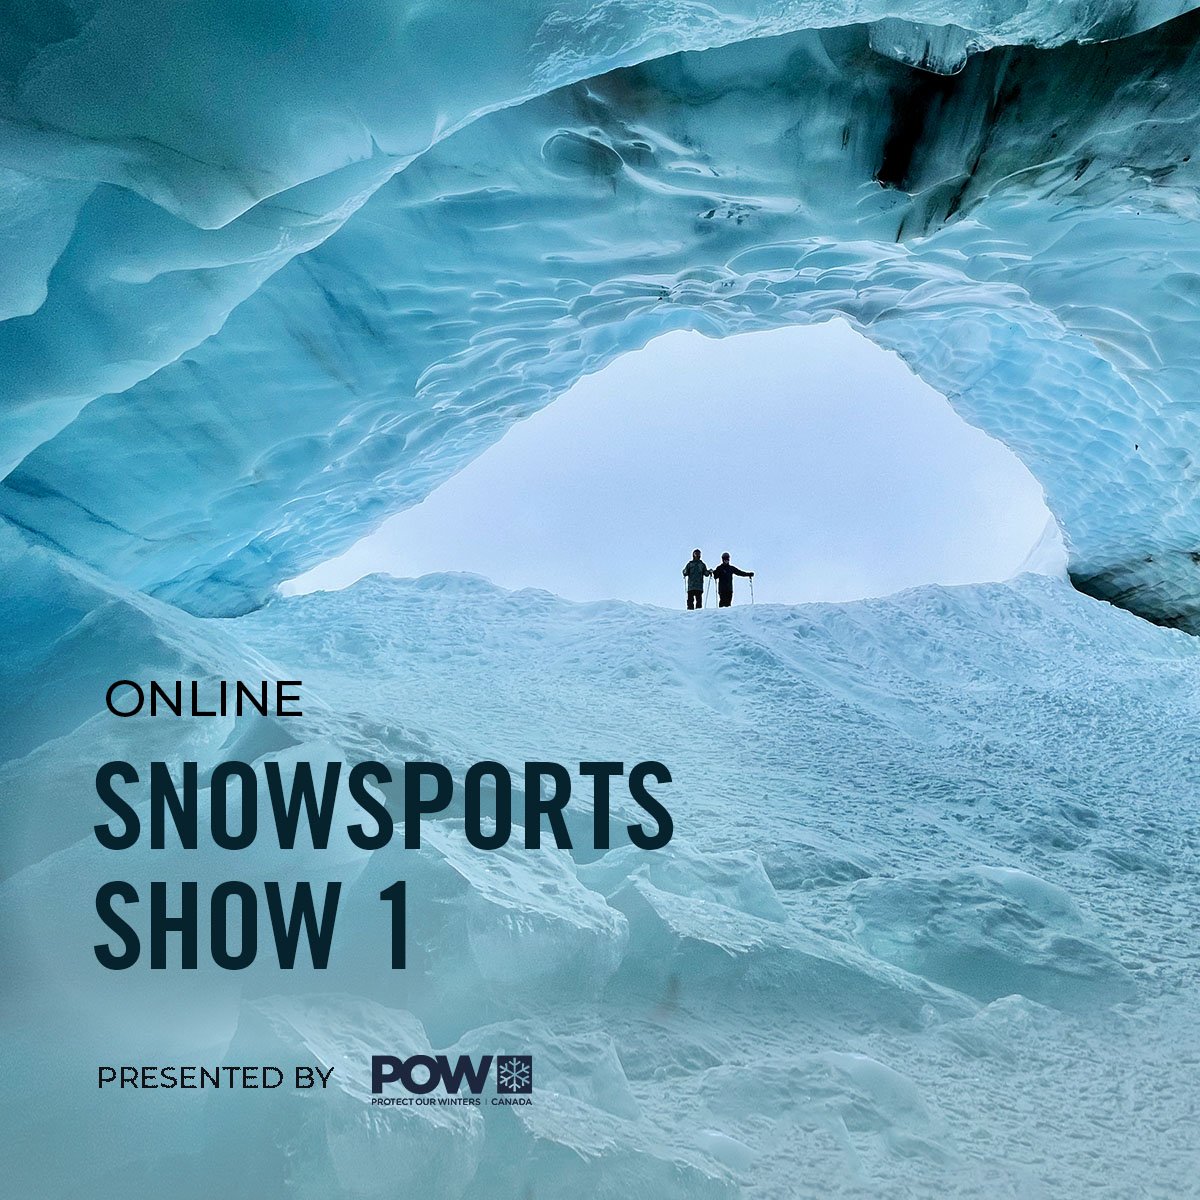 VIMFF Fall Series online snowsports show pow x